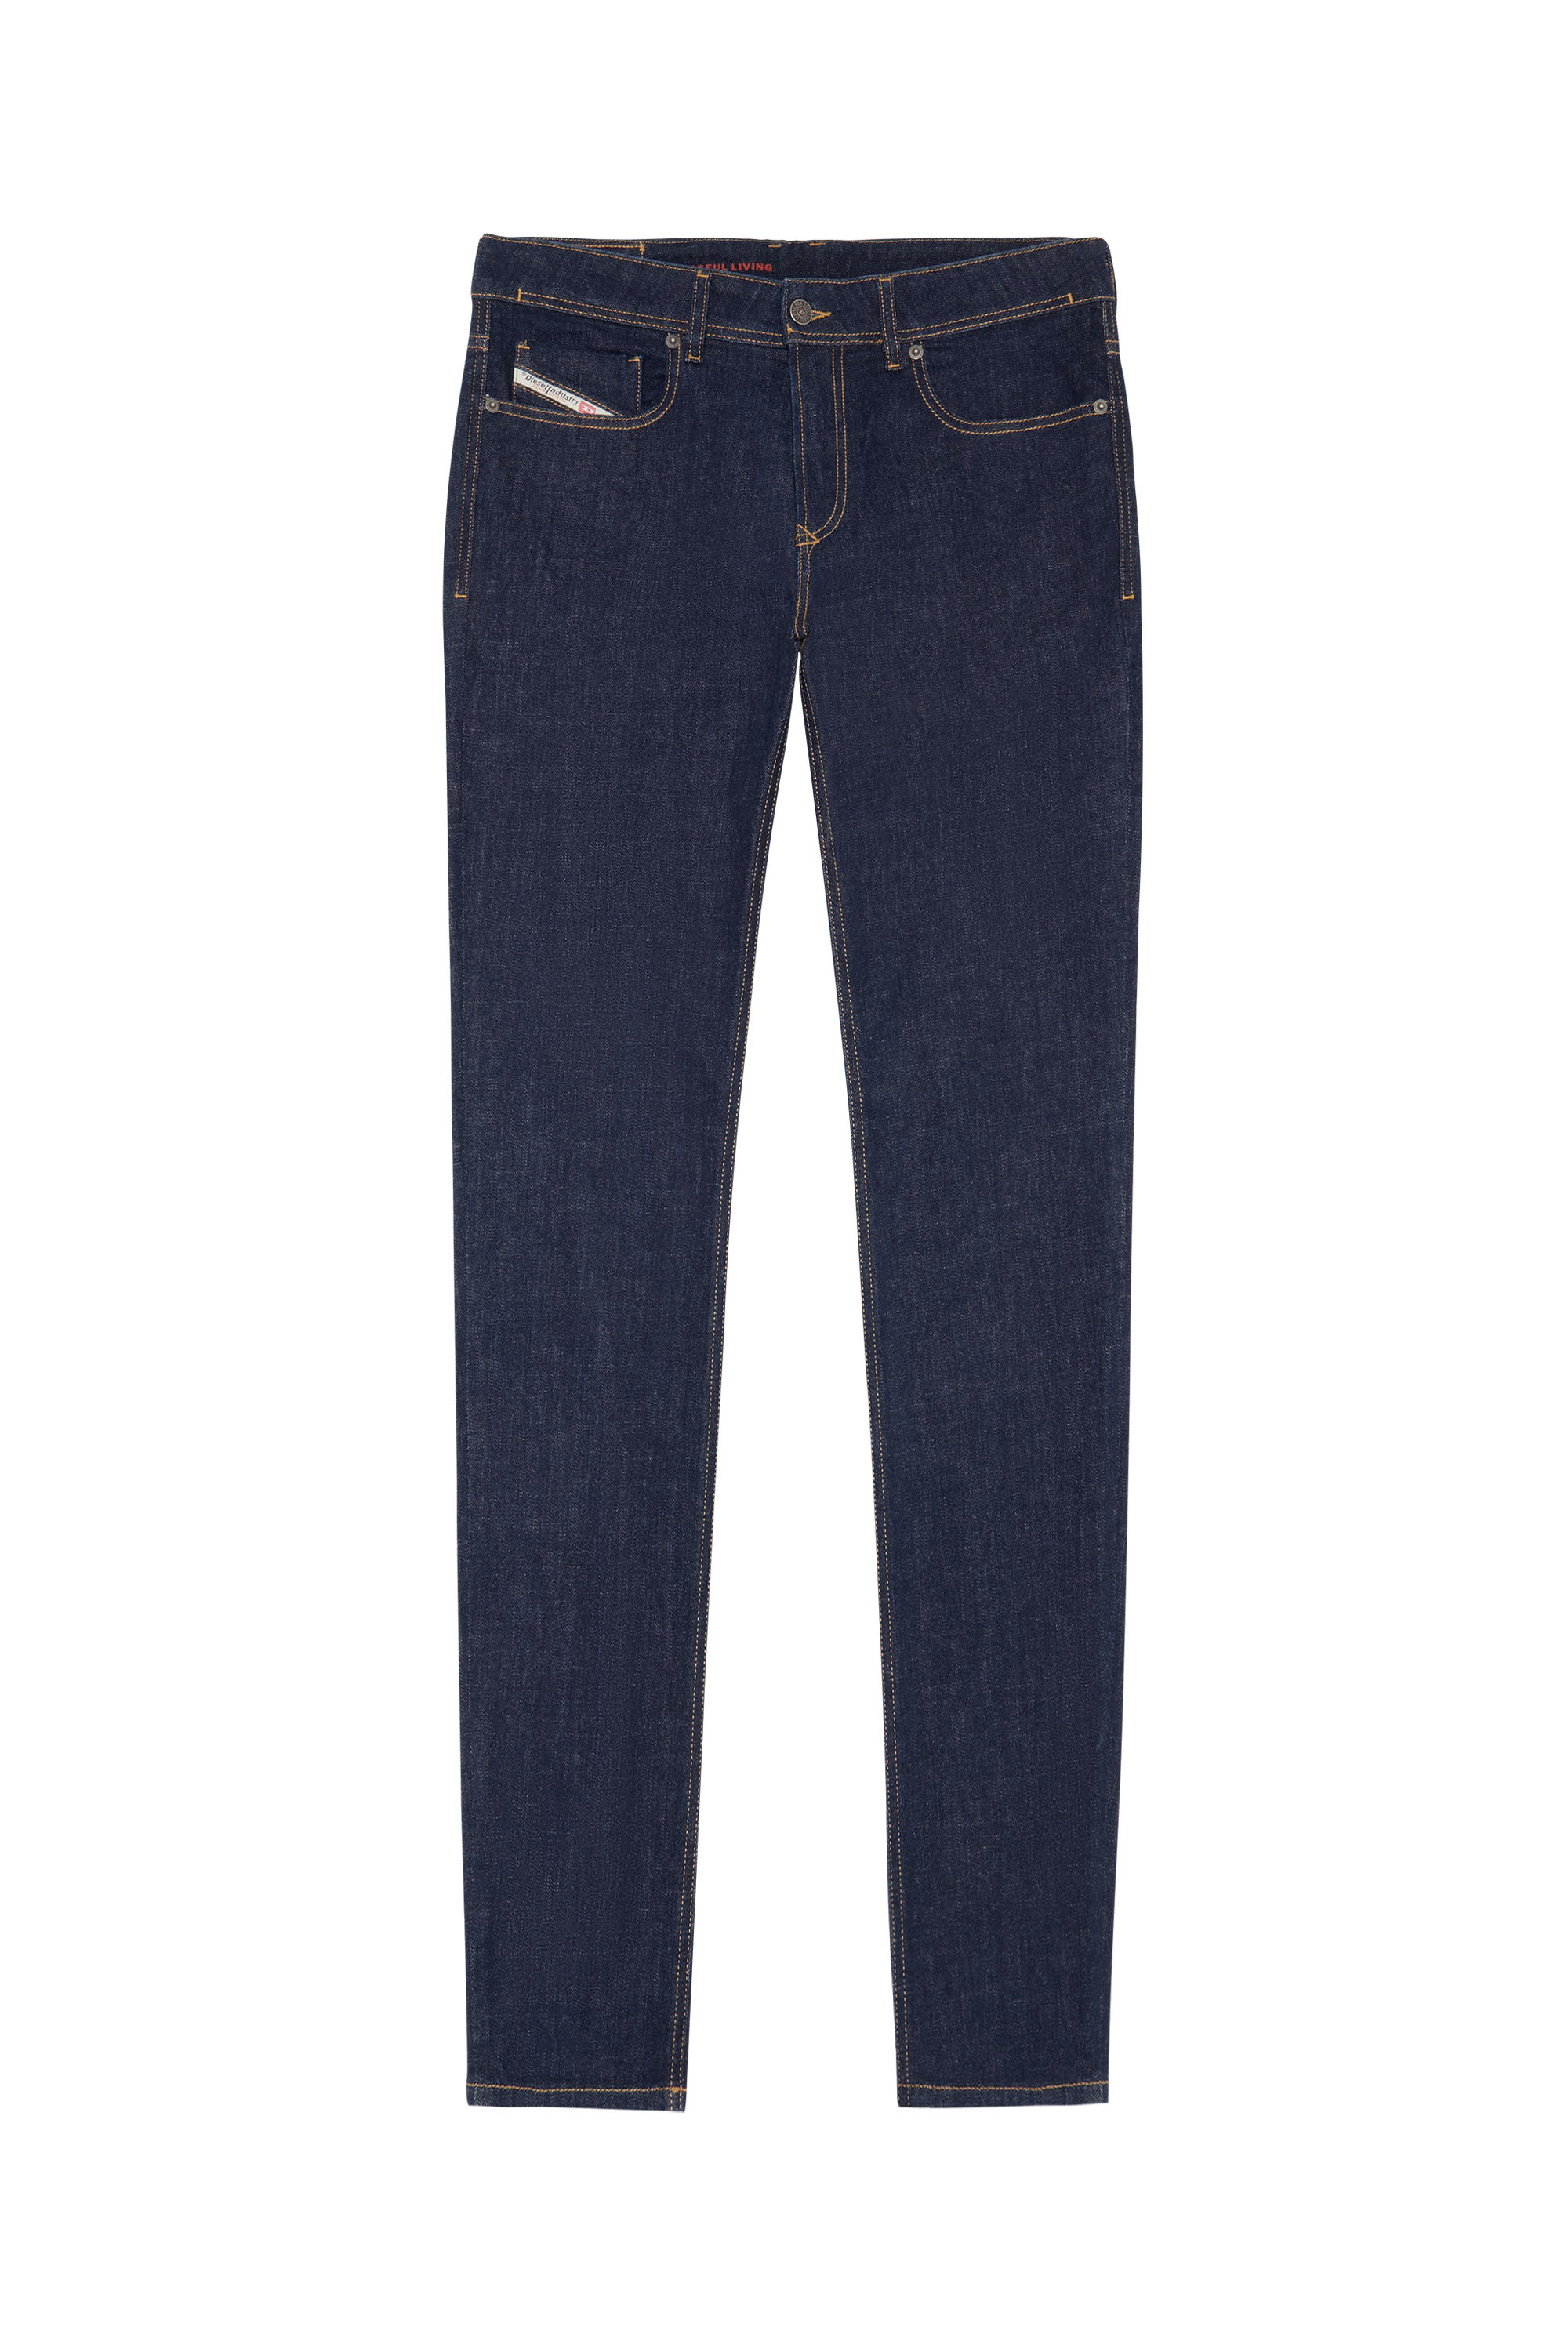 1979 SLEENKER Z9C17 Skinny Jeans, Dark Blue - Jeans